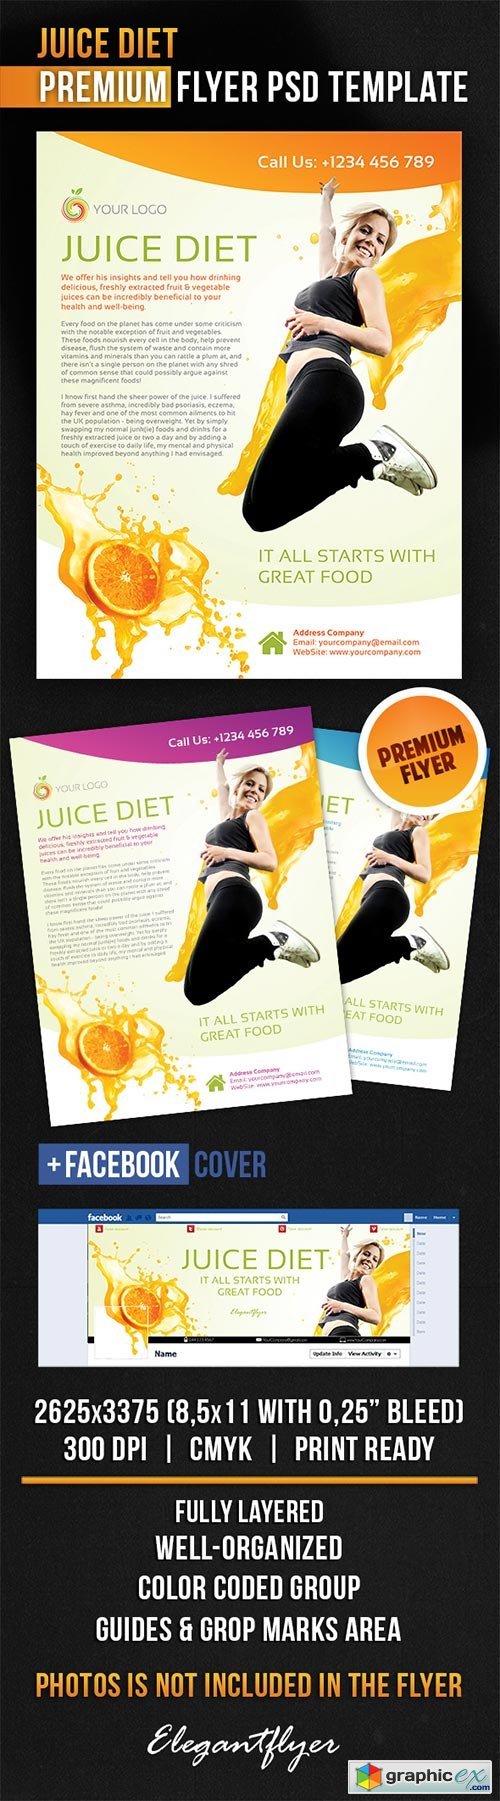 Juice Diet Flyer PSD Template + Facebook Cover